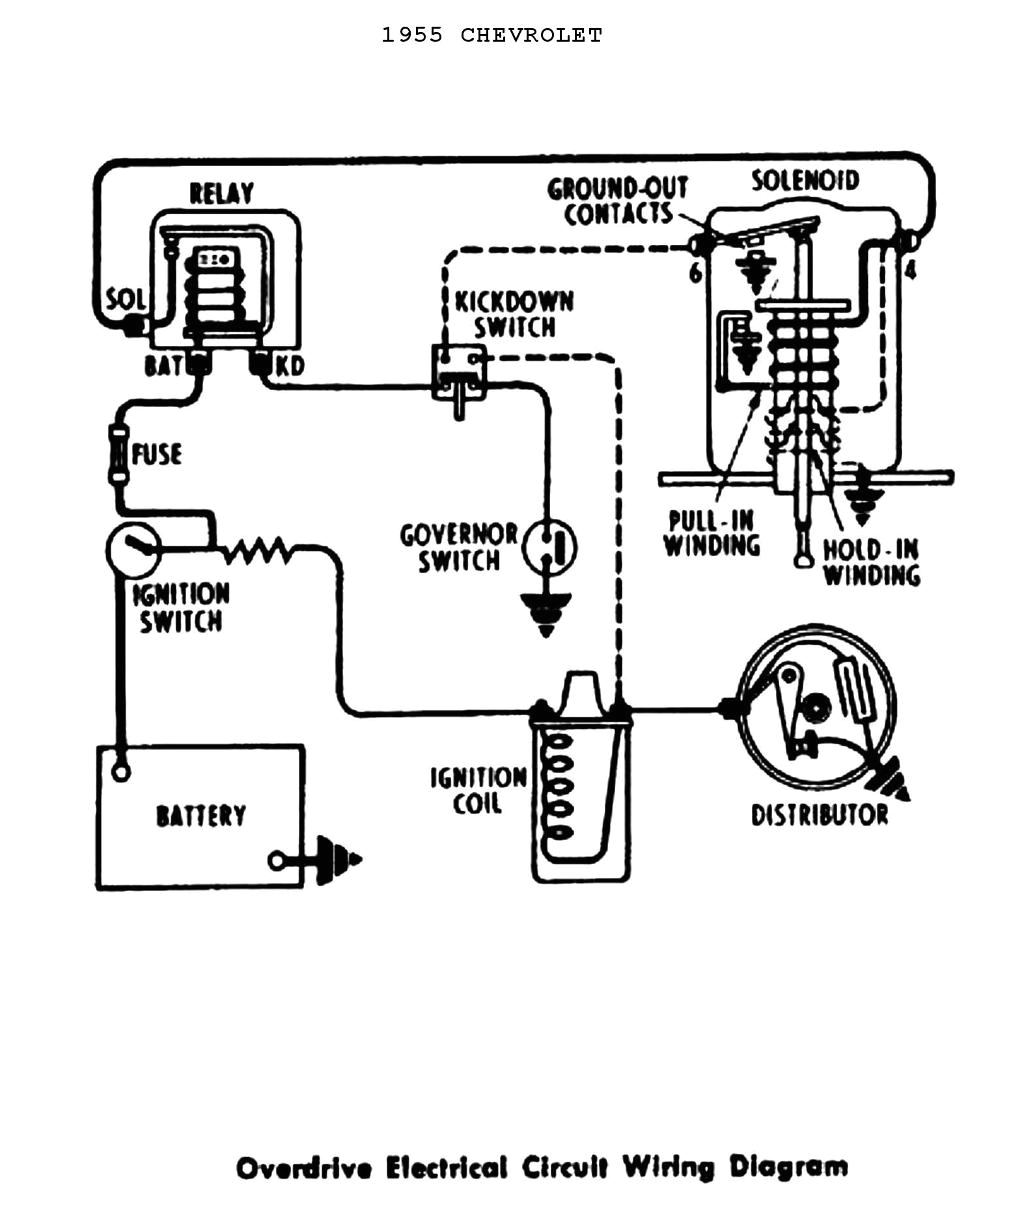 ignition wiring chevy blog wiring diagram car ignition wiring chevy truck switch diagram